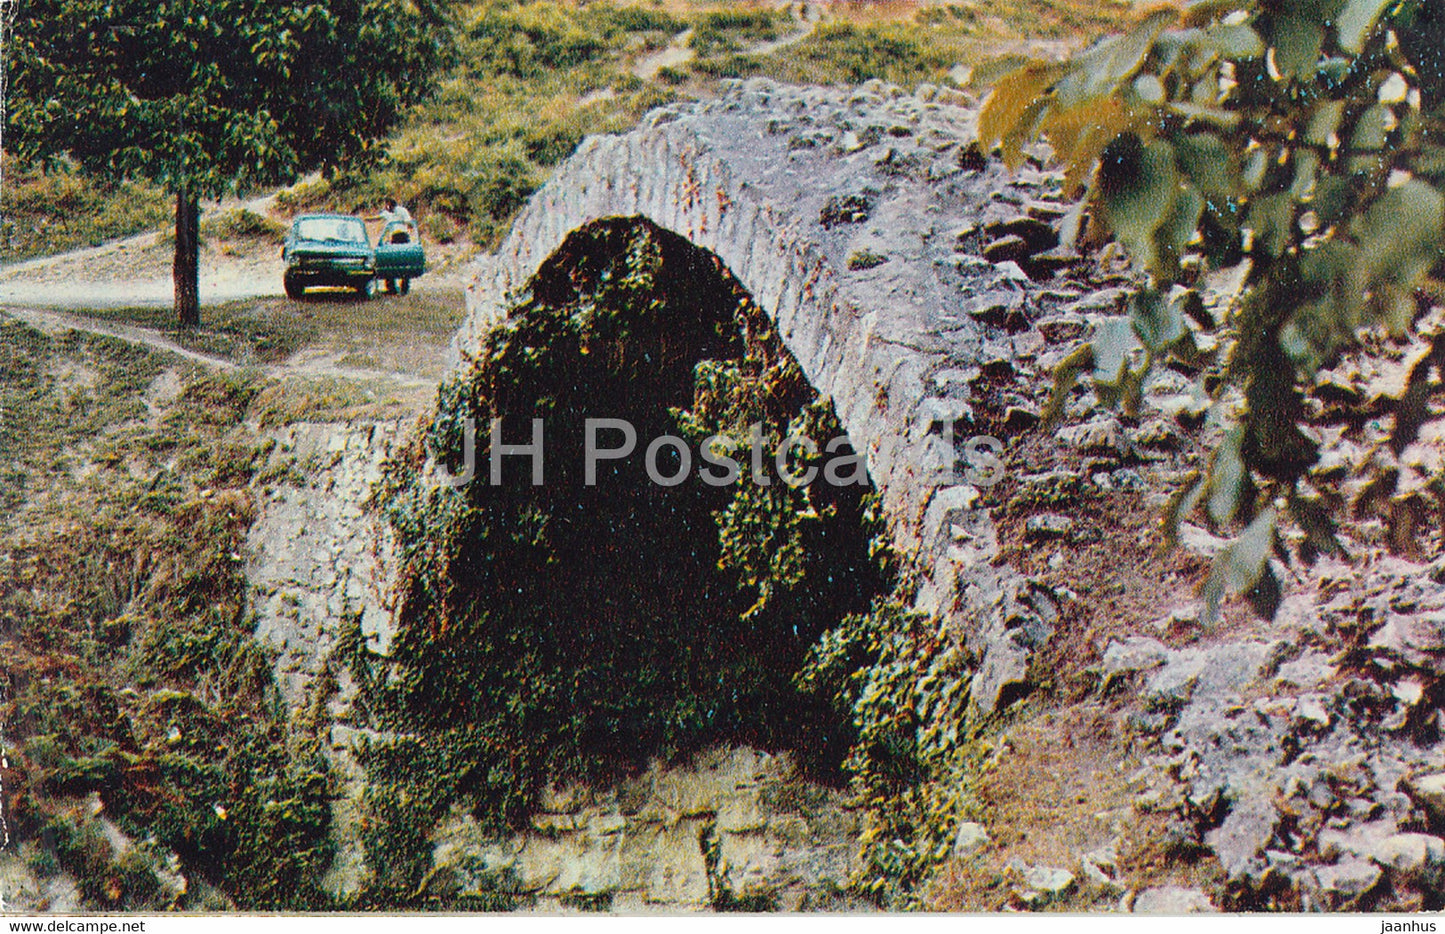 Sukhumi - Sokhumi - Bridge over Besla river - Abkhazia - 1974 - Georgia USSR - unused - JH Postcards